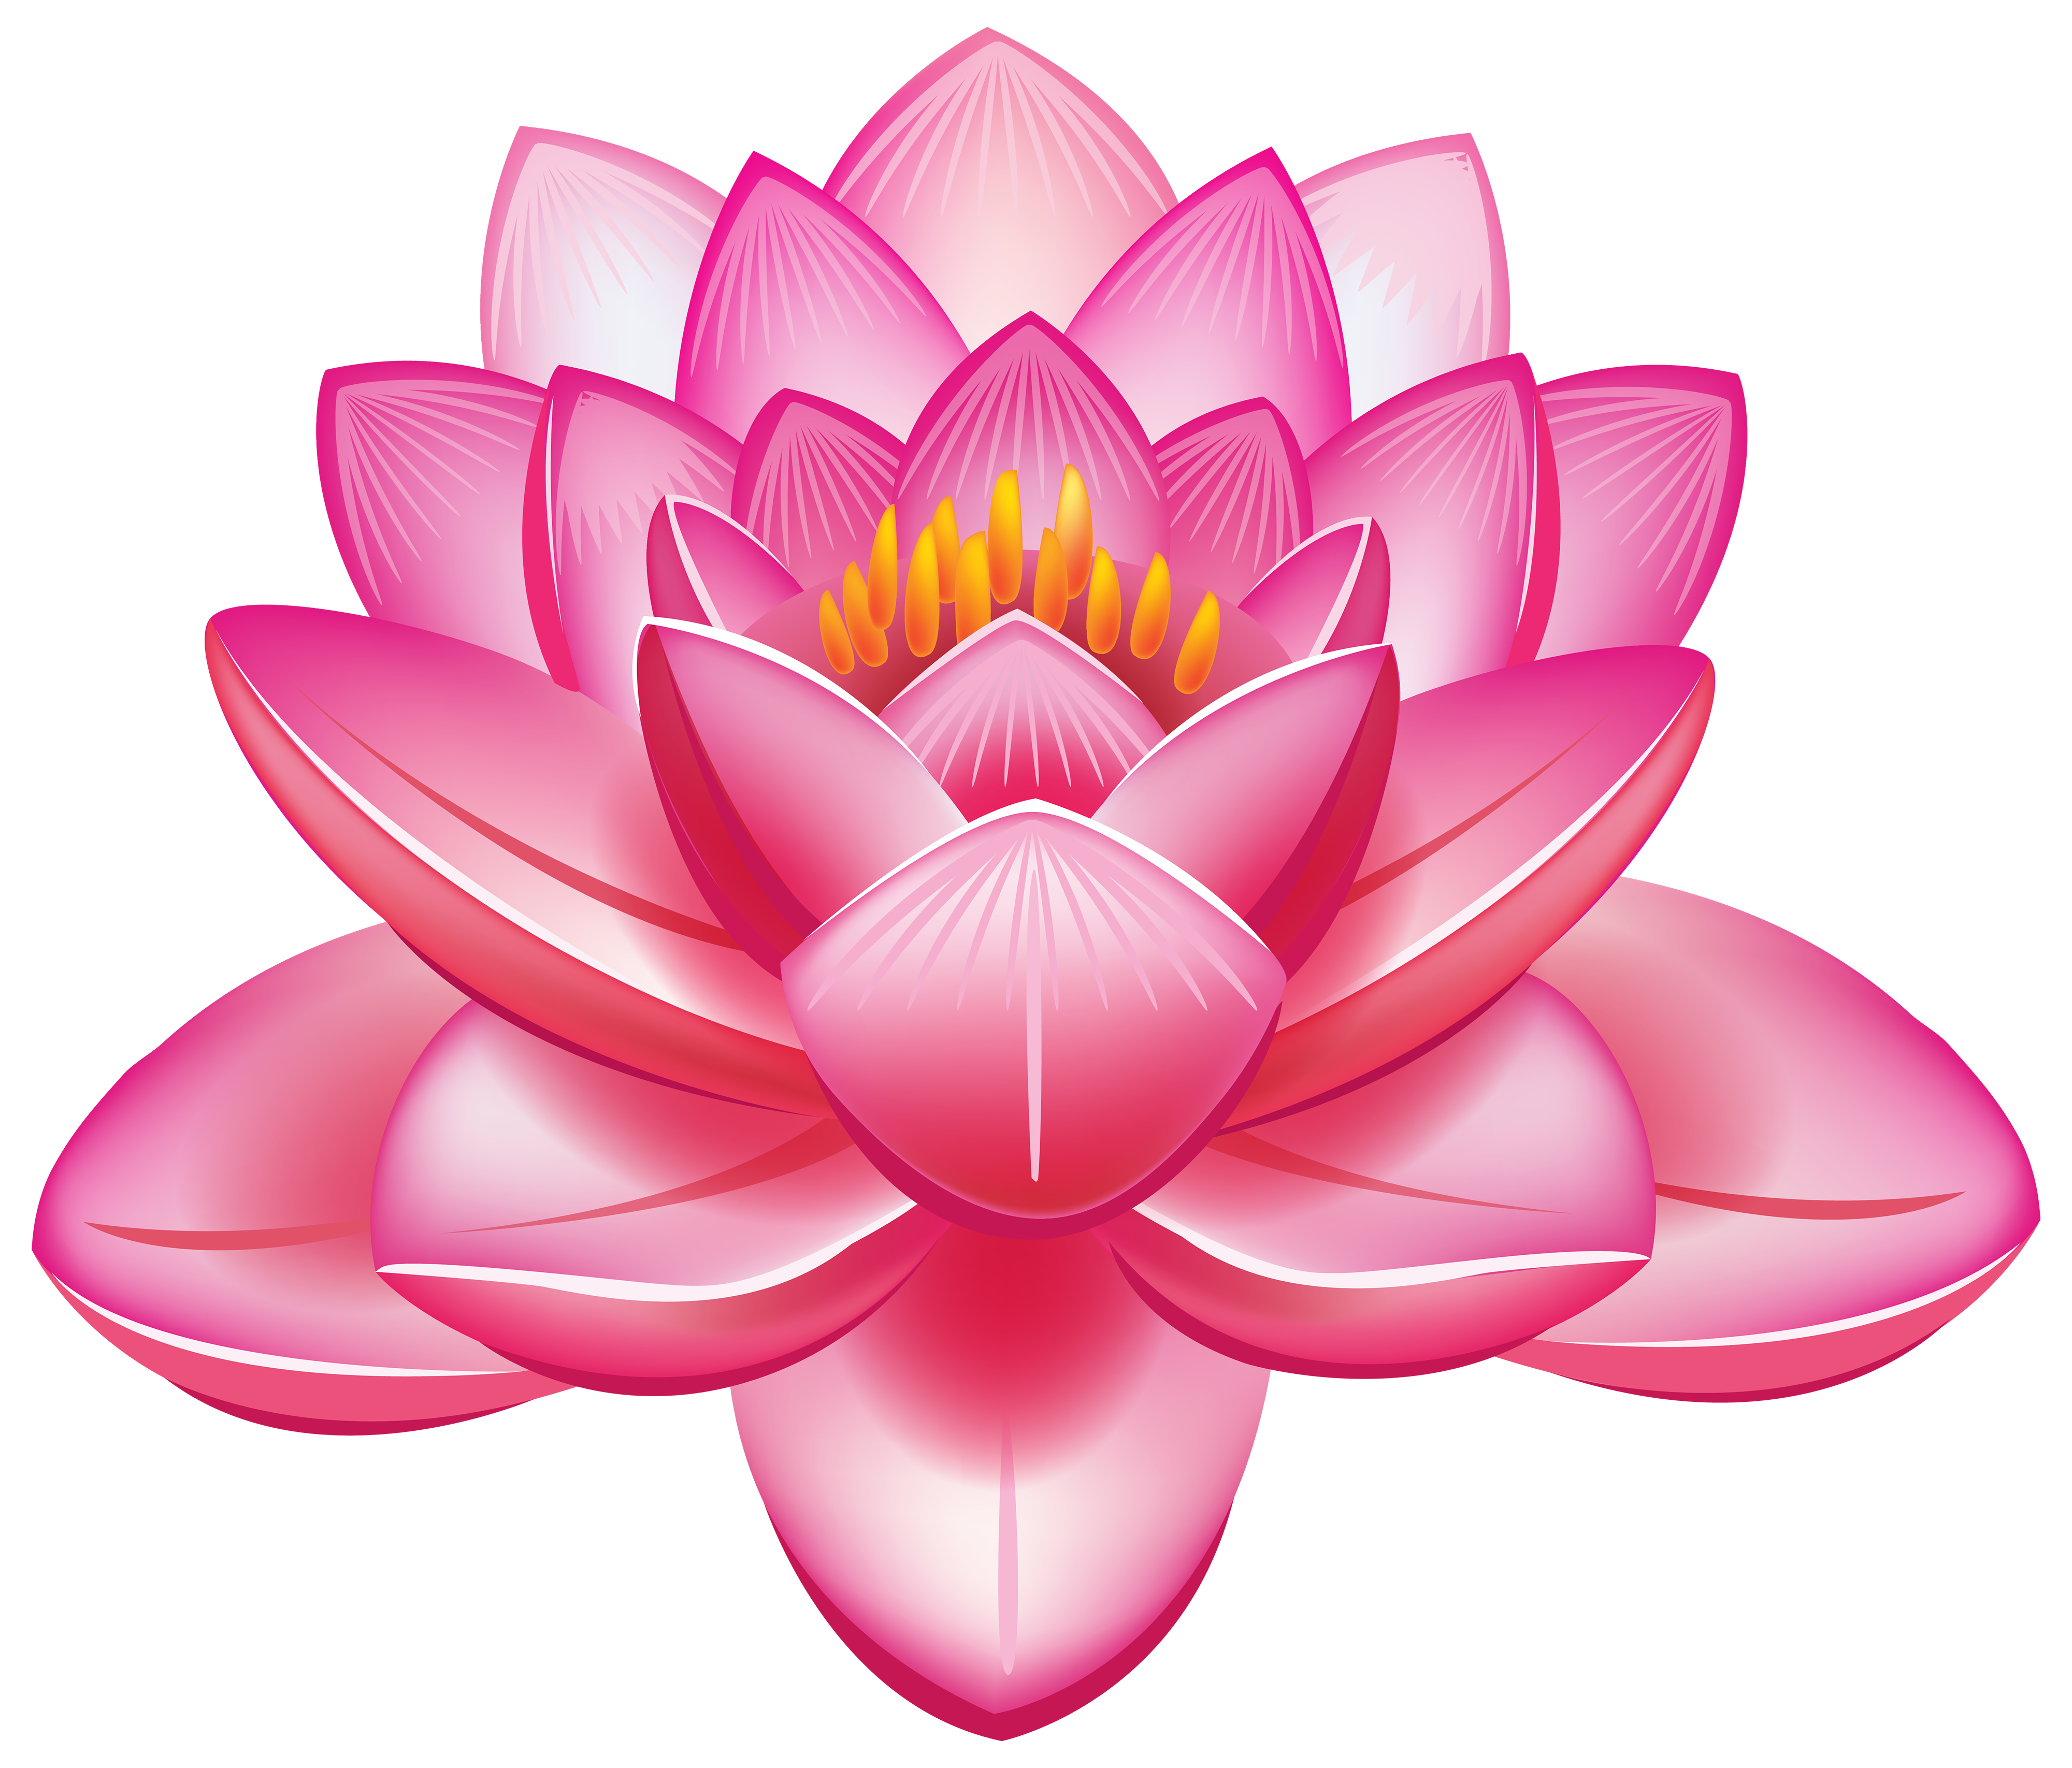 pin Vase clipart lotus flower